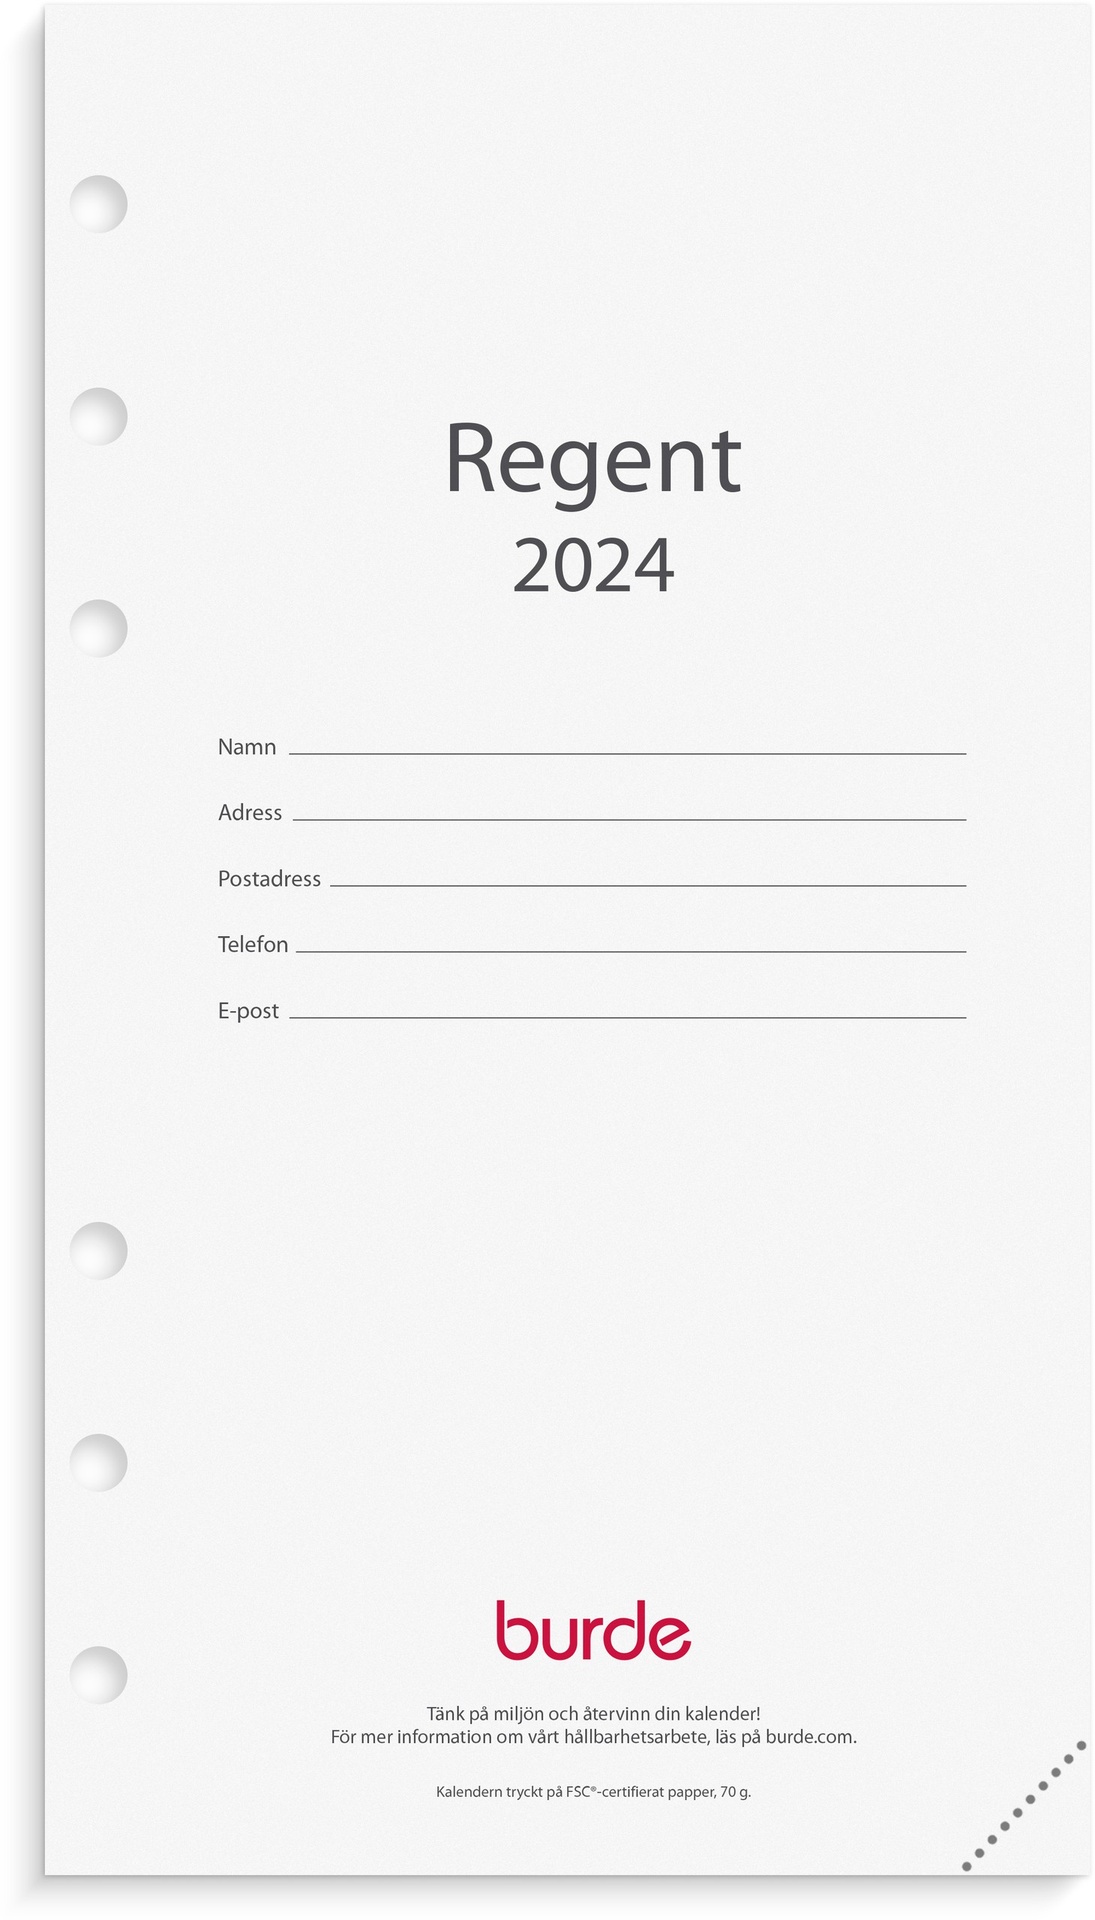 [61460124] Regent kalendersats 2024